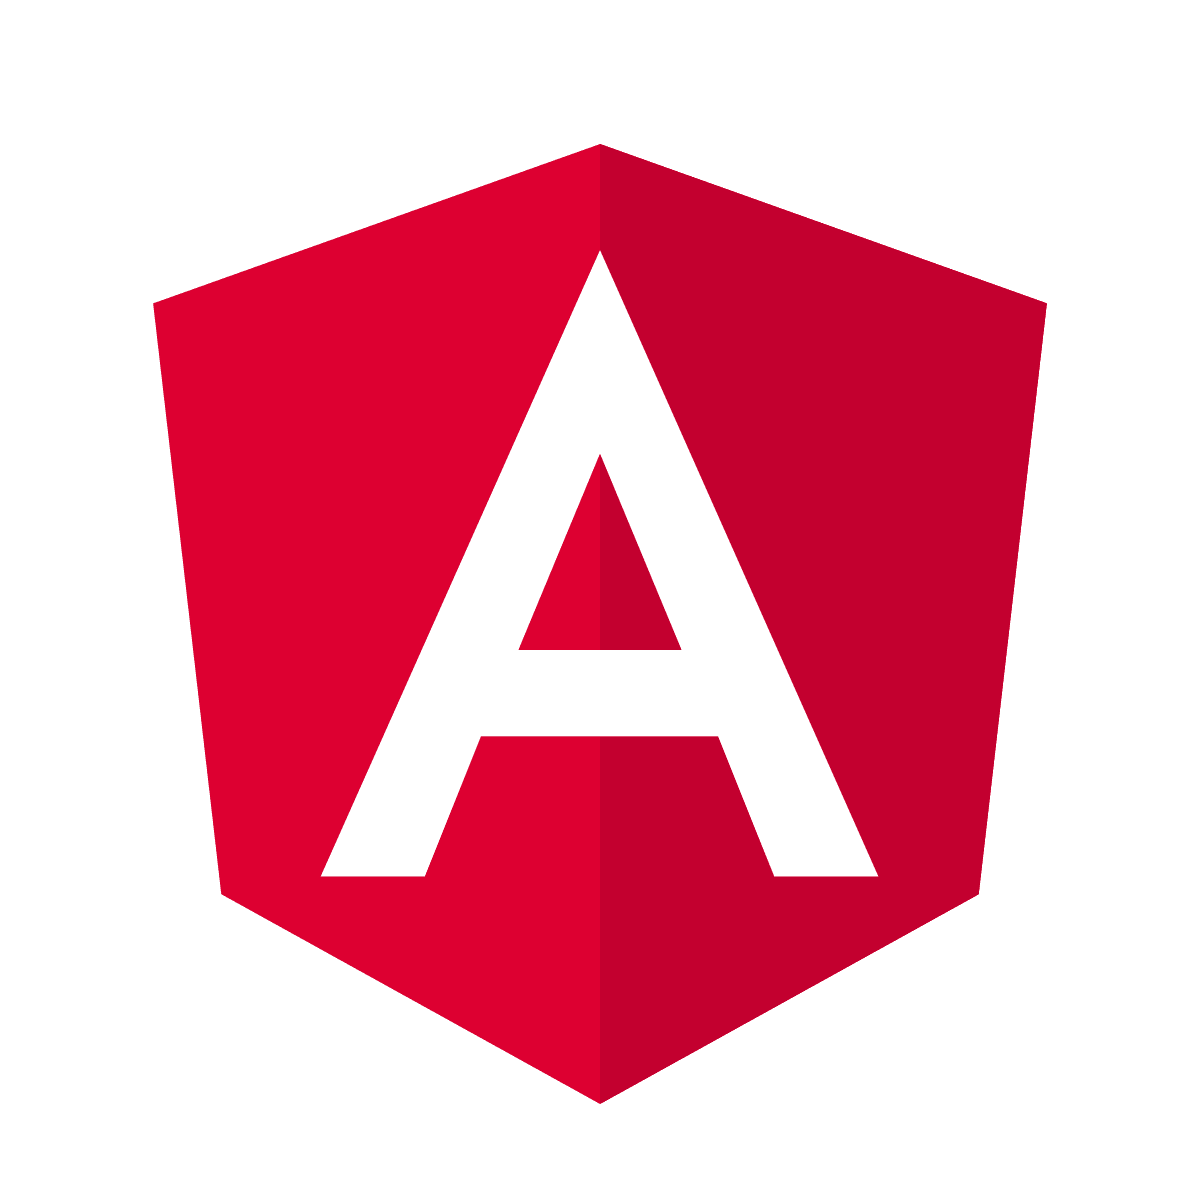 Angular JavaScript Frameworks